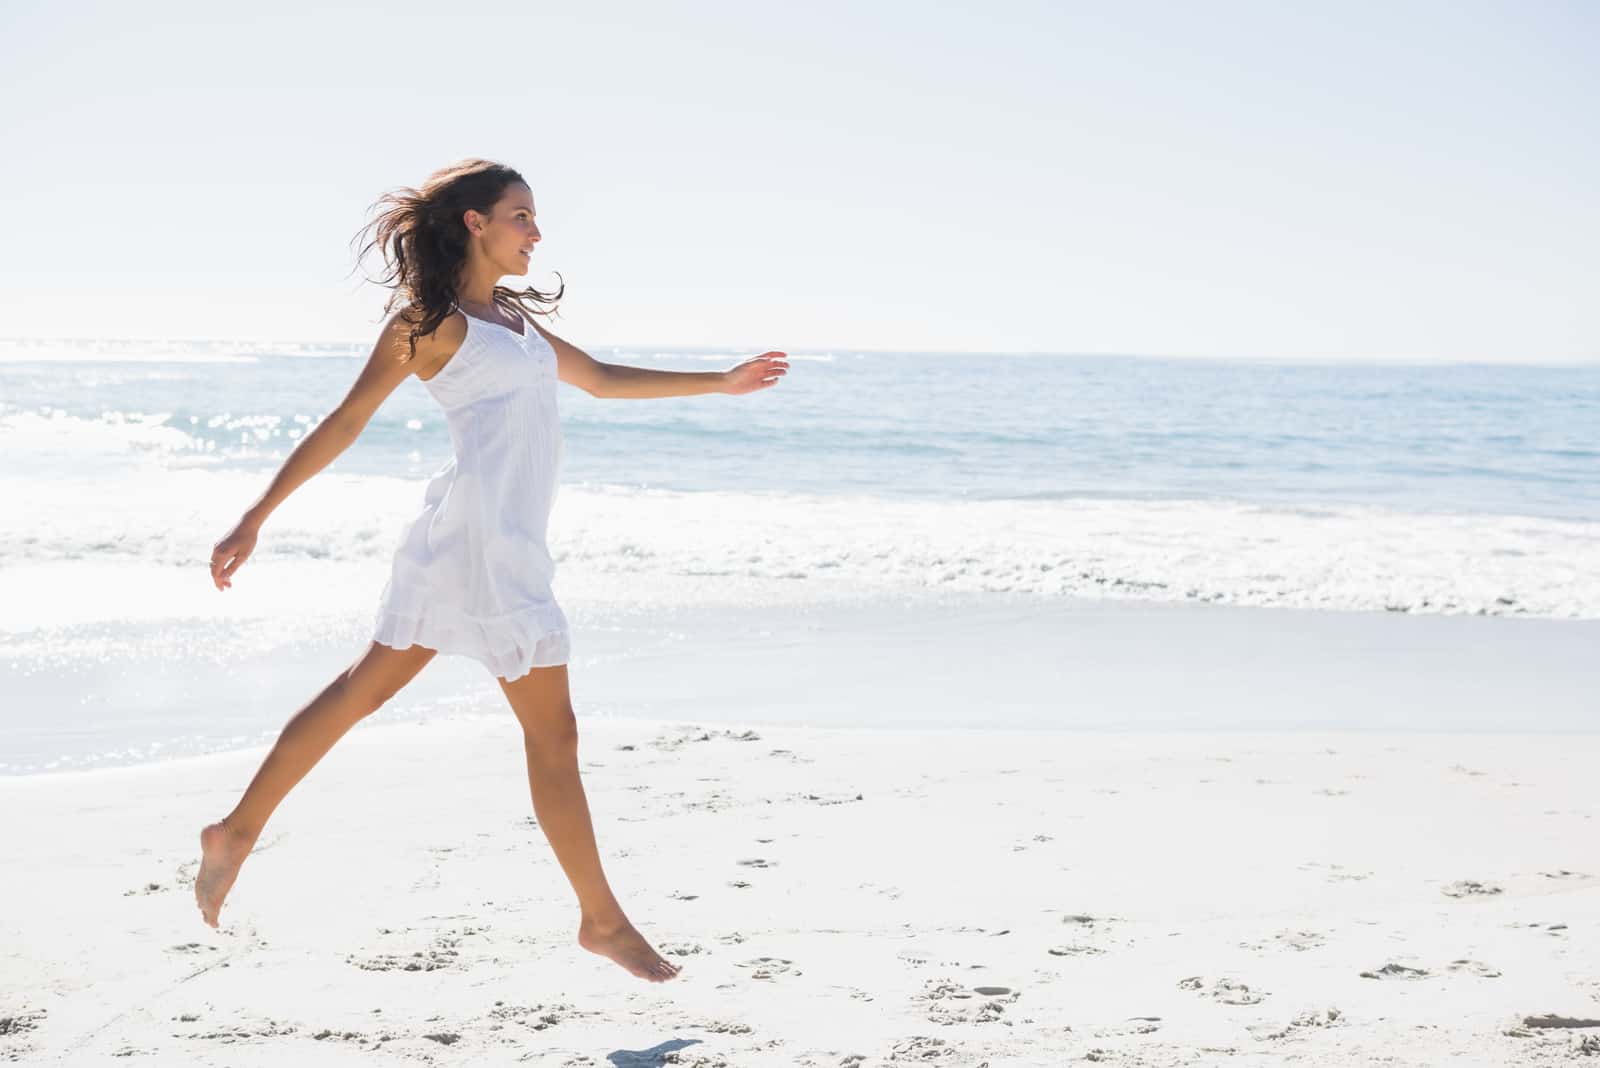 a woman with long brown hair runs across the beach